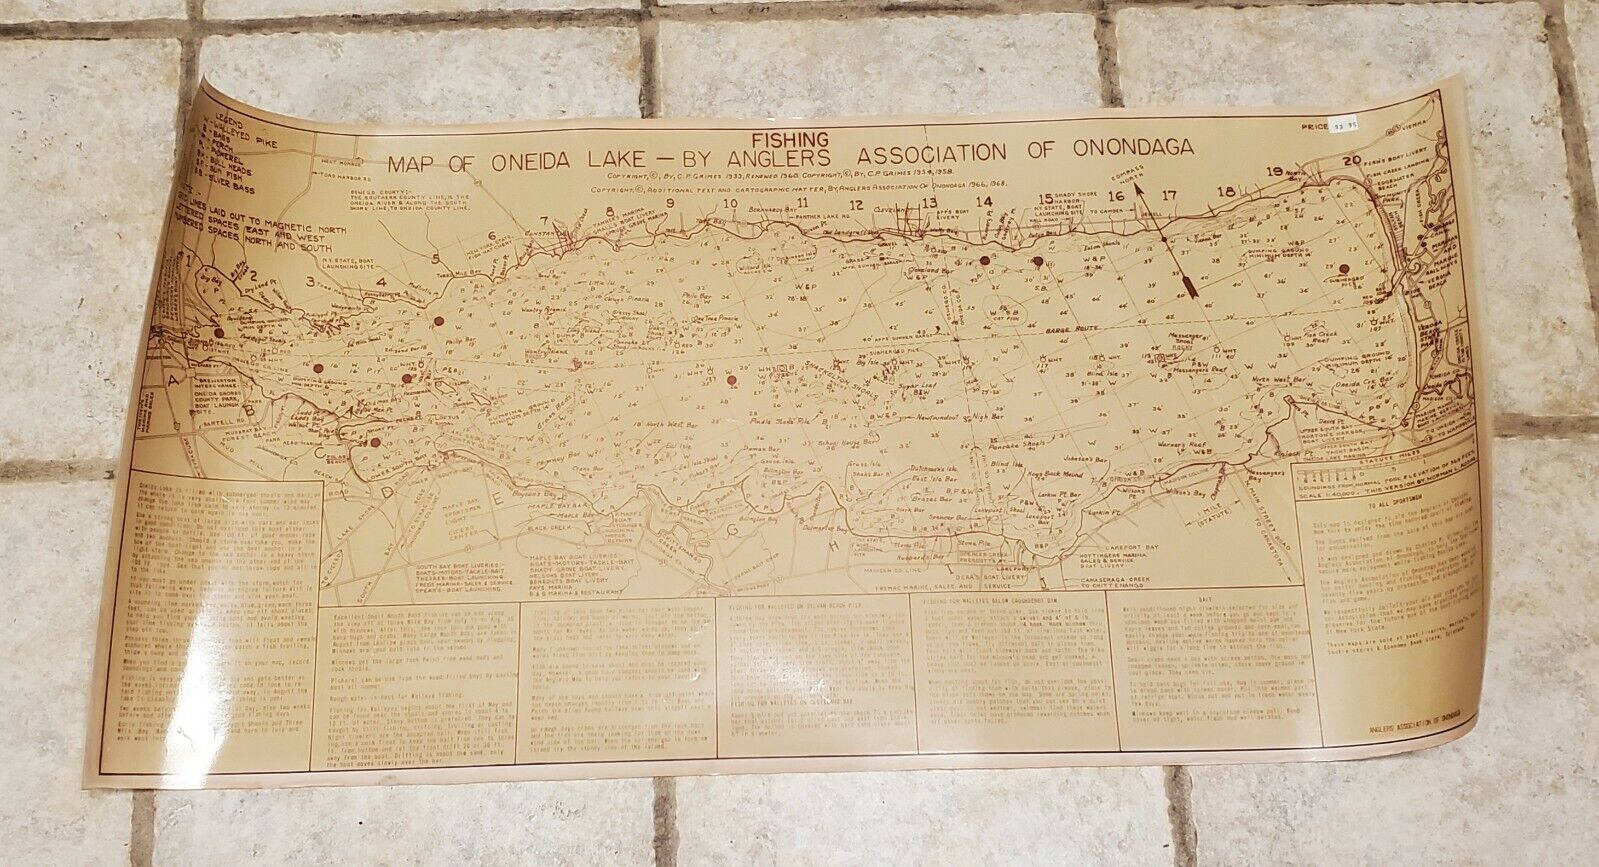 Vintage Map of Oneida Lake Fishing by Anglers Association of Onondaga 1954-1968 